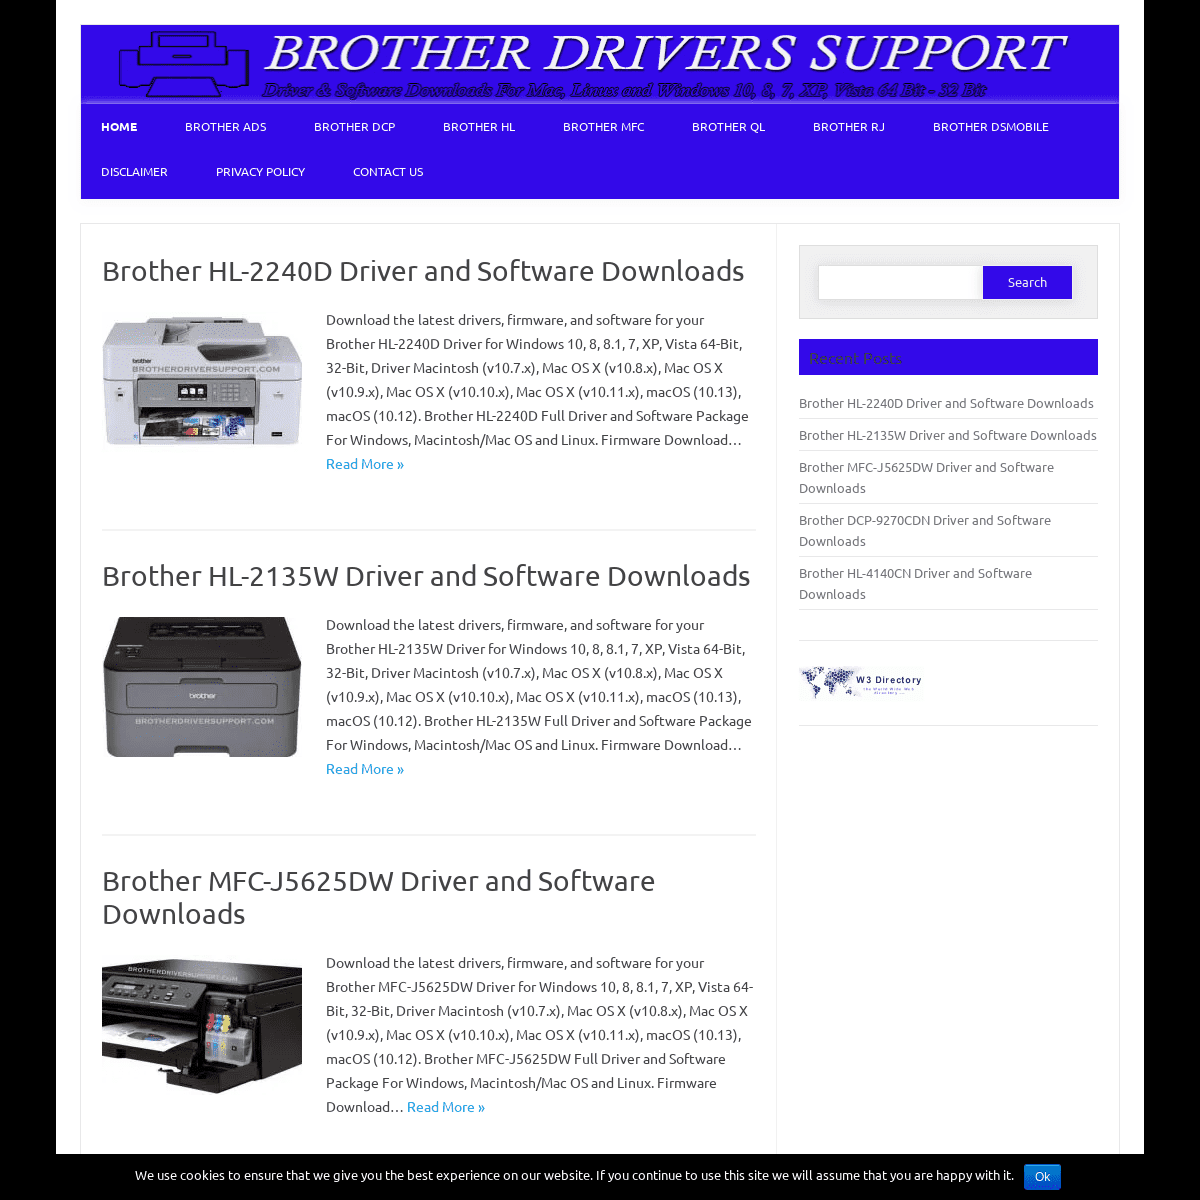 A complete backup of brotherdriversupport.com